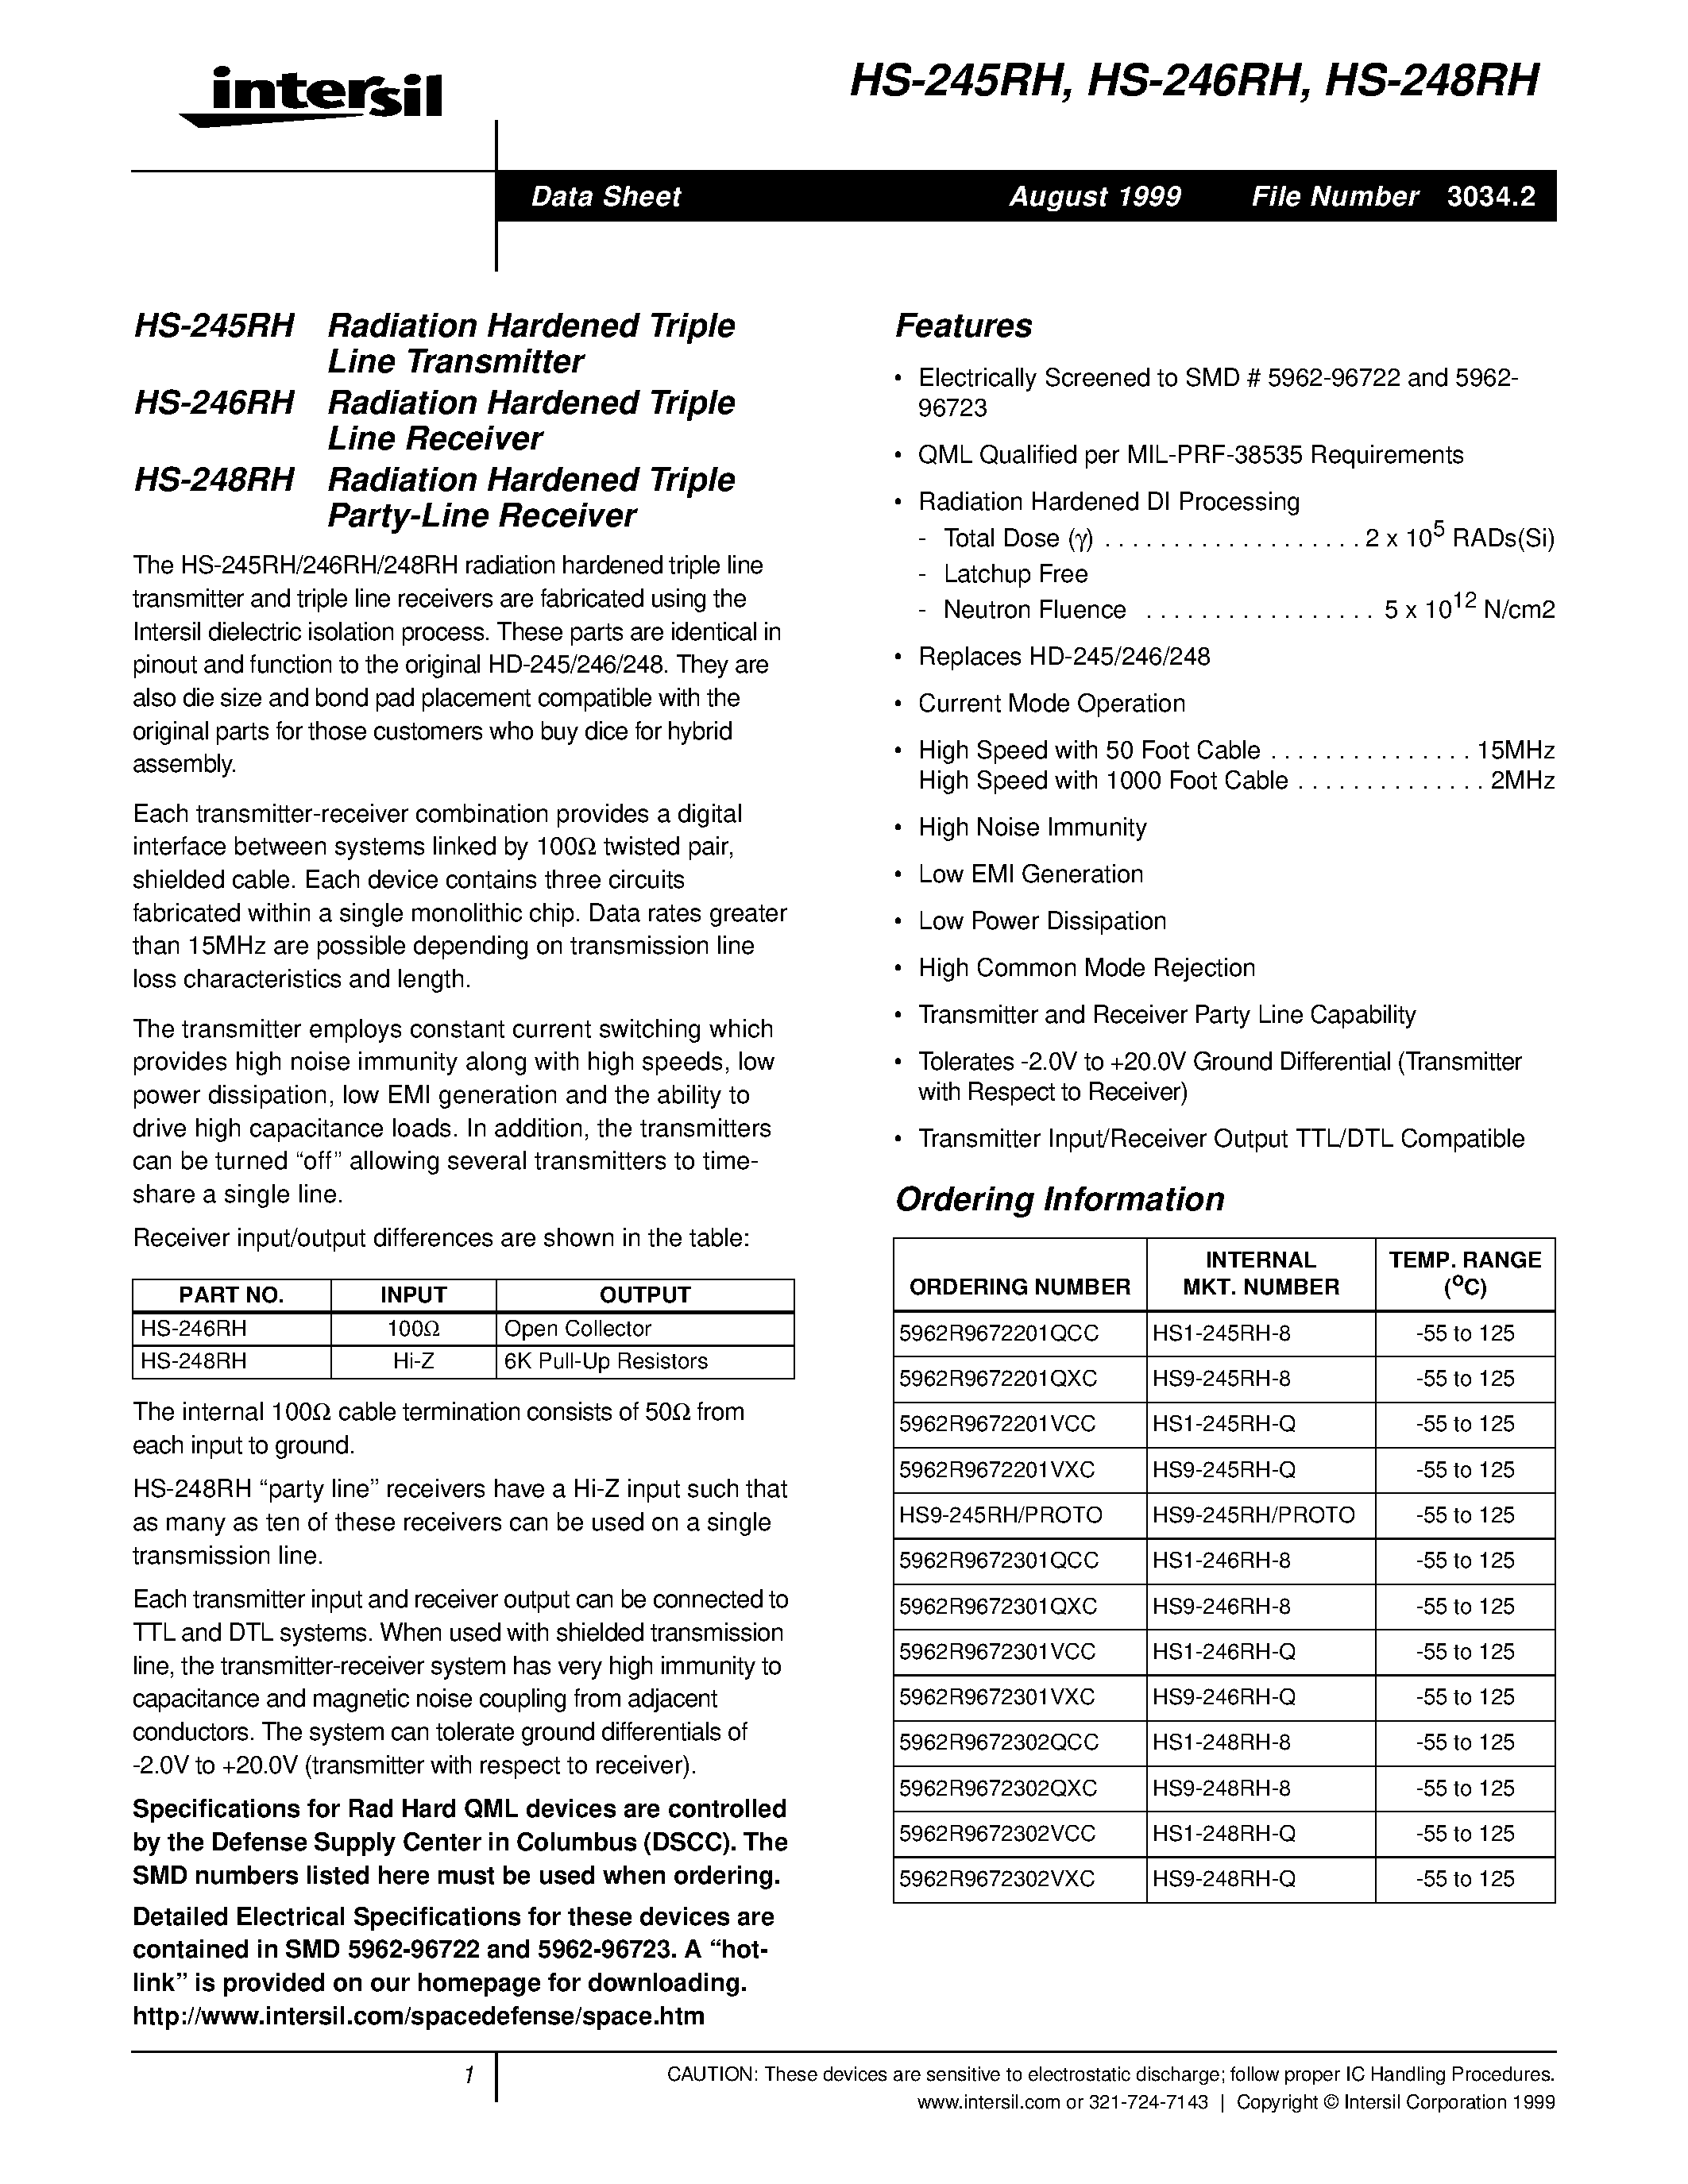 Datasheet HS1-248RH-8 - Radiation Hardened Triple Line(party-Line) Transmitter page 1